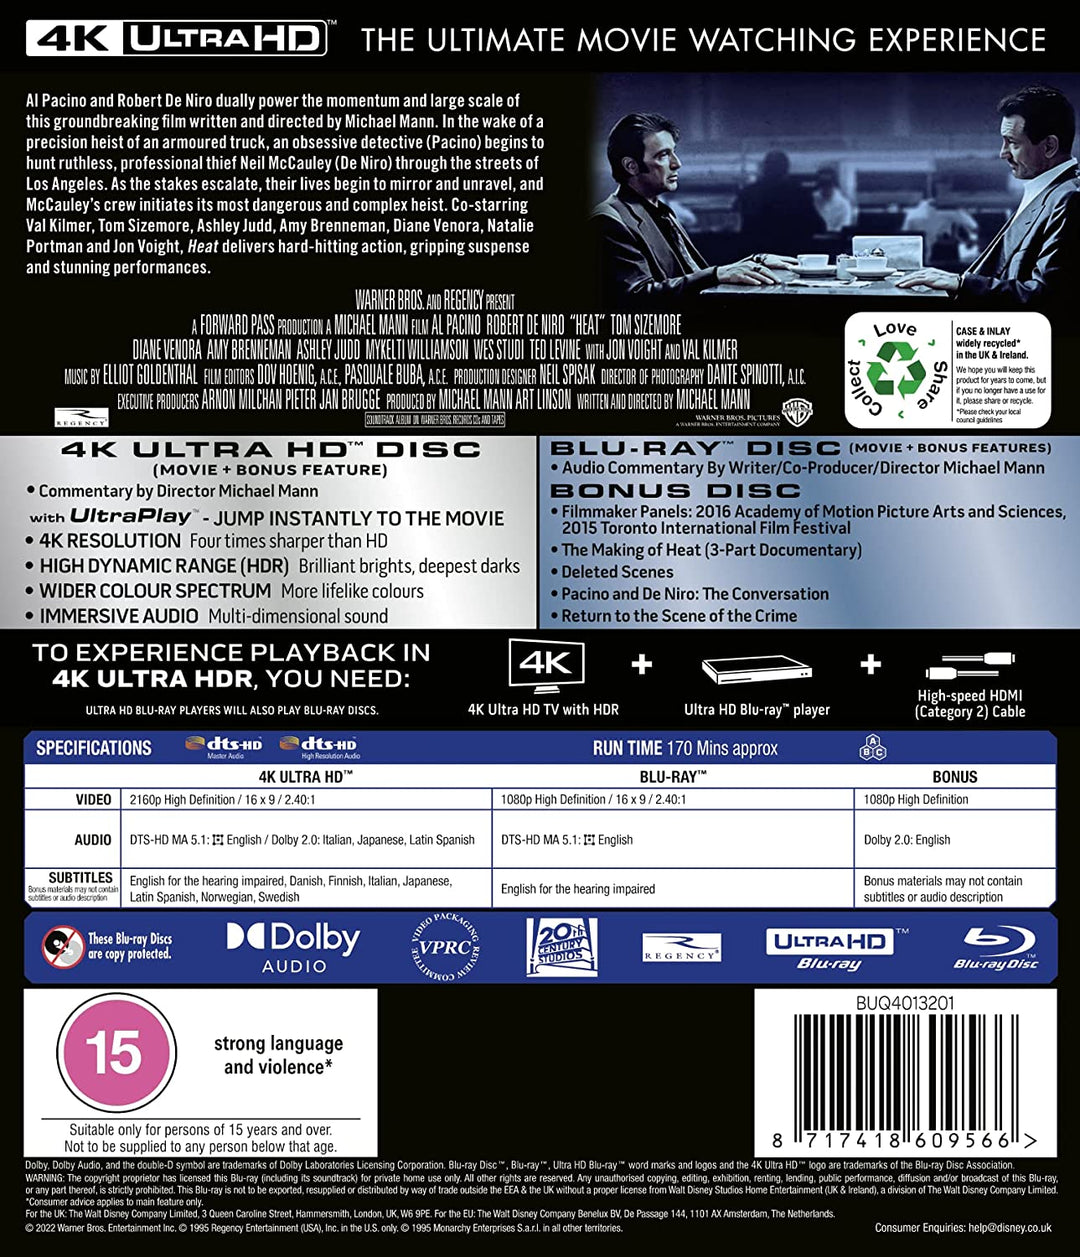 Heat 4K Ultra-HD - Thriller [Blu-ray] [Region Free]